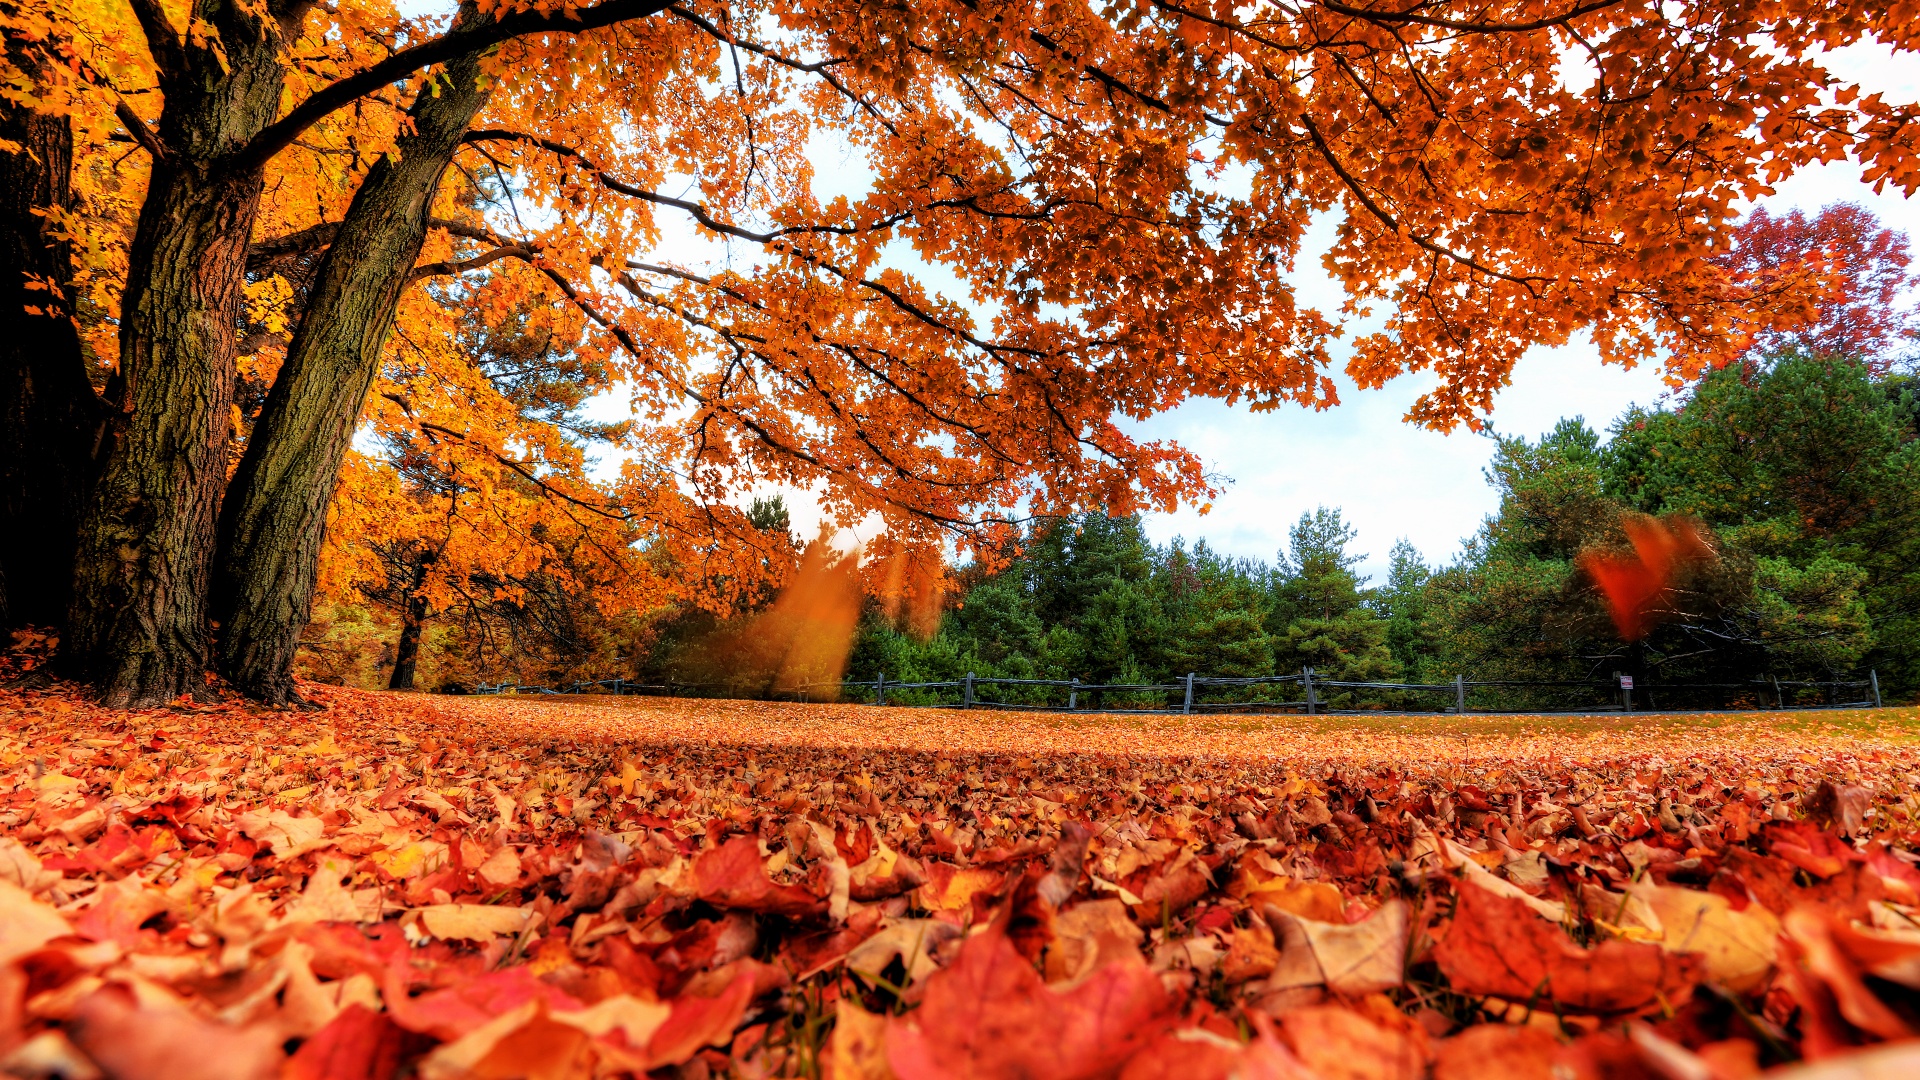 Download wallpaper 1366x768 autumn forest park foliage sunlight tablet  laptop hd background